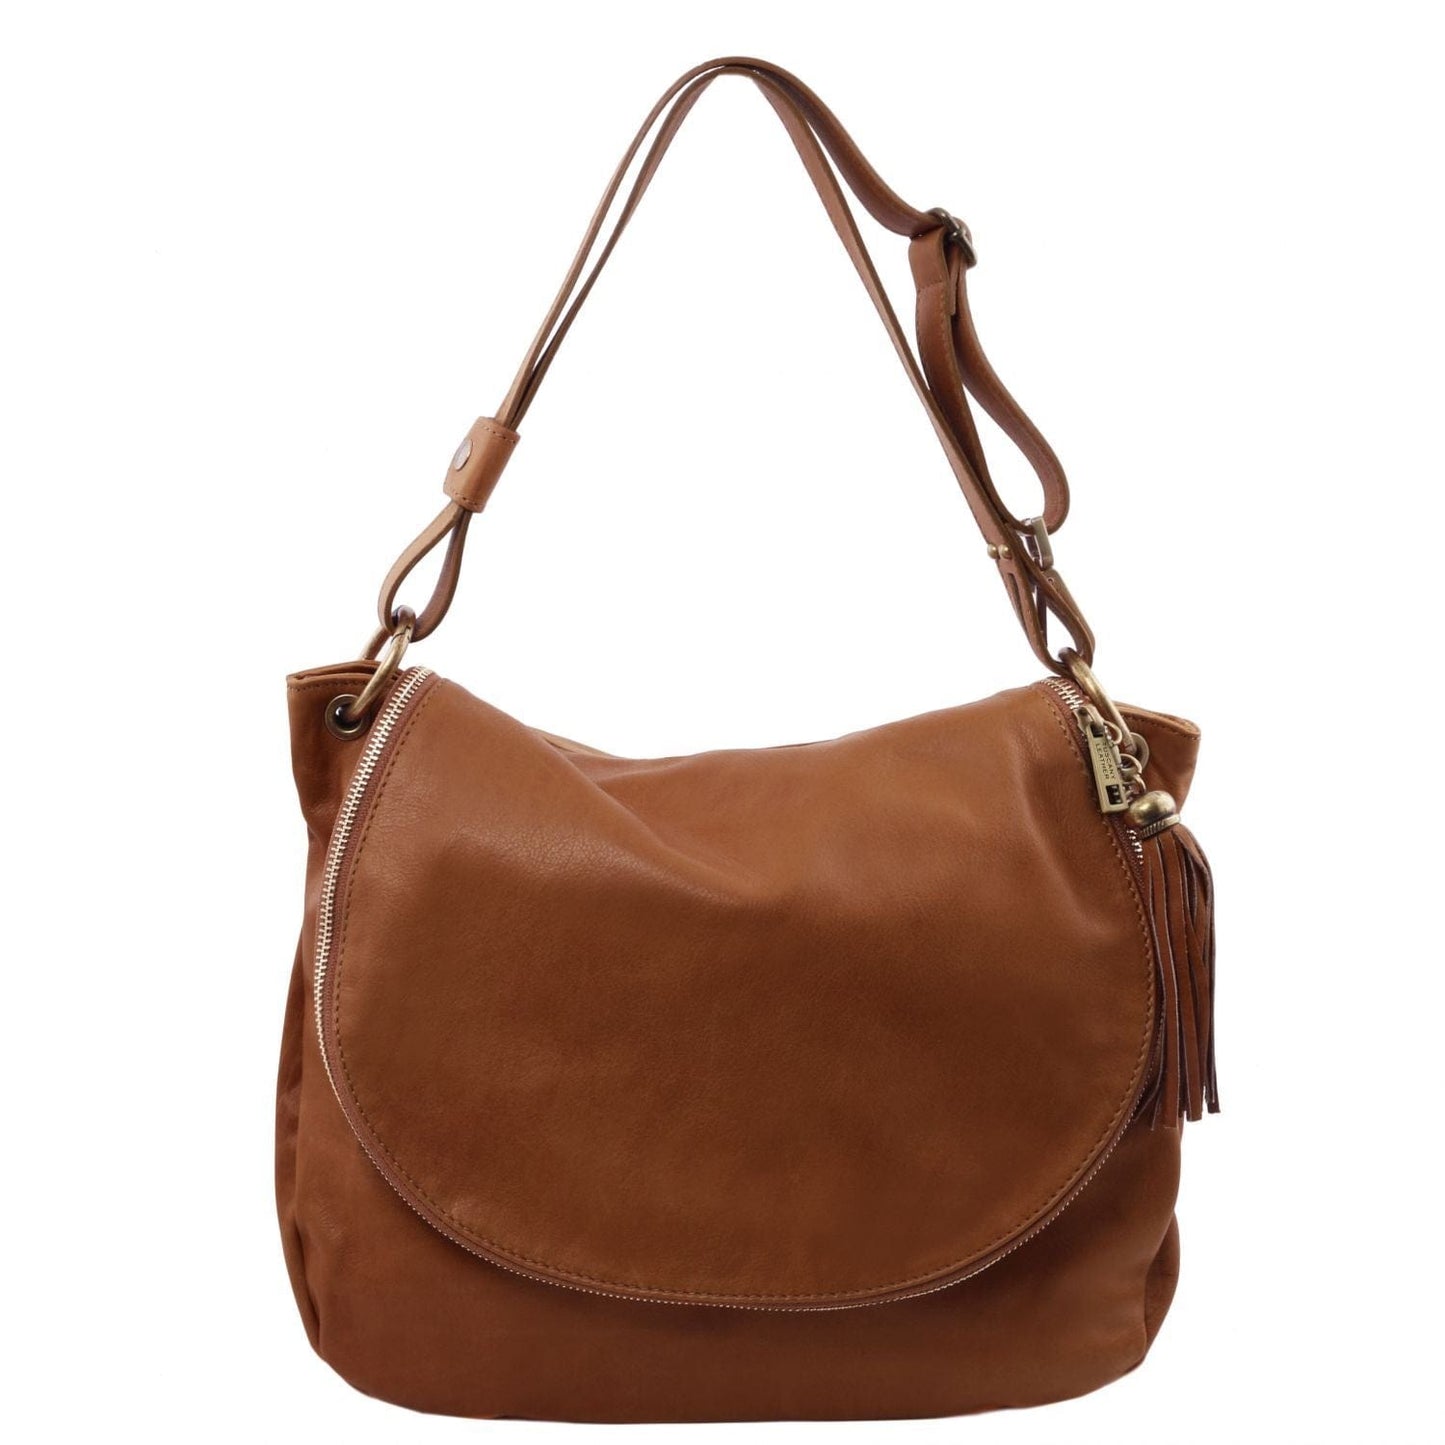 TL Bag - Soft leather shoulder bag with tassel detail | TL141110 - Premium Leather shoulder bags - Shop now at San Rocco Italia